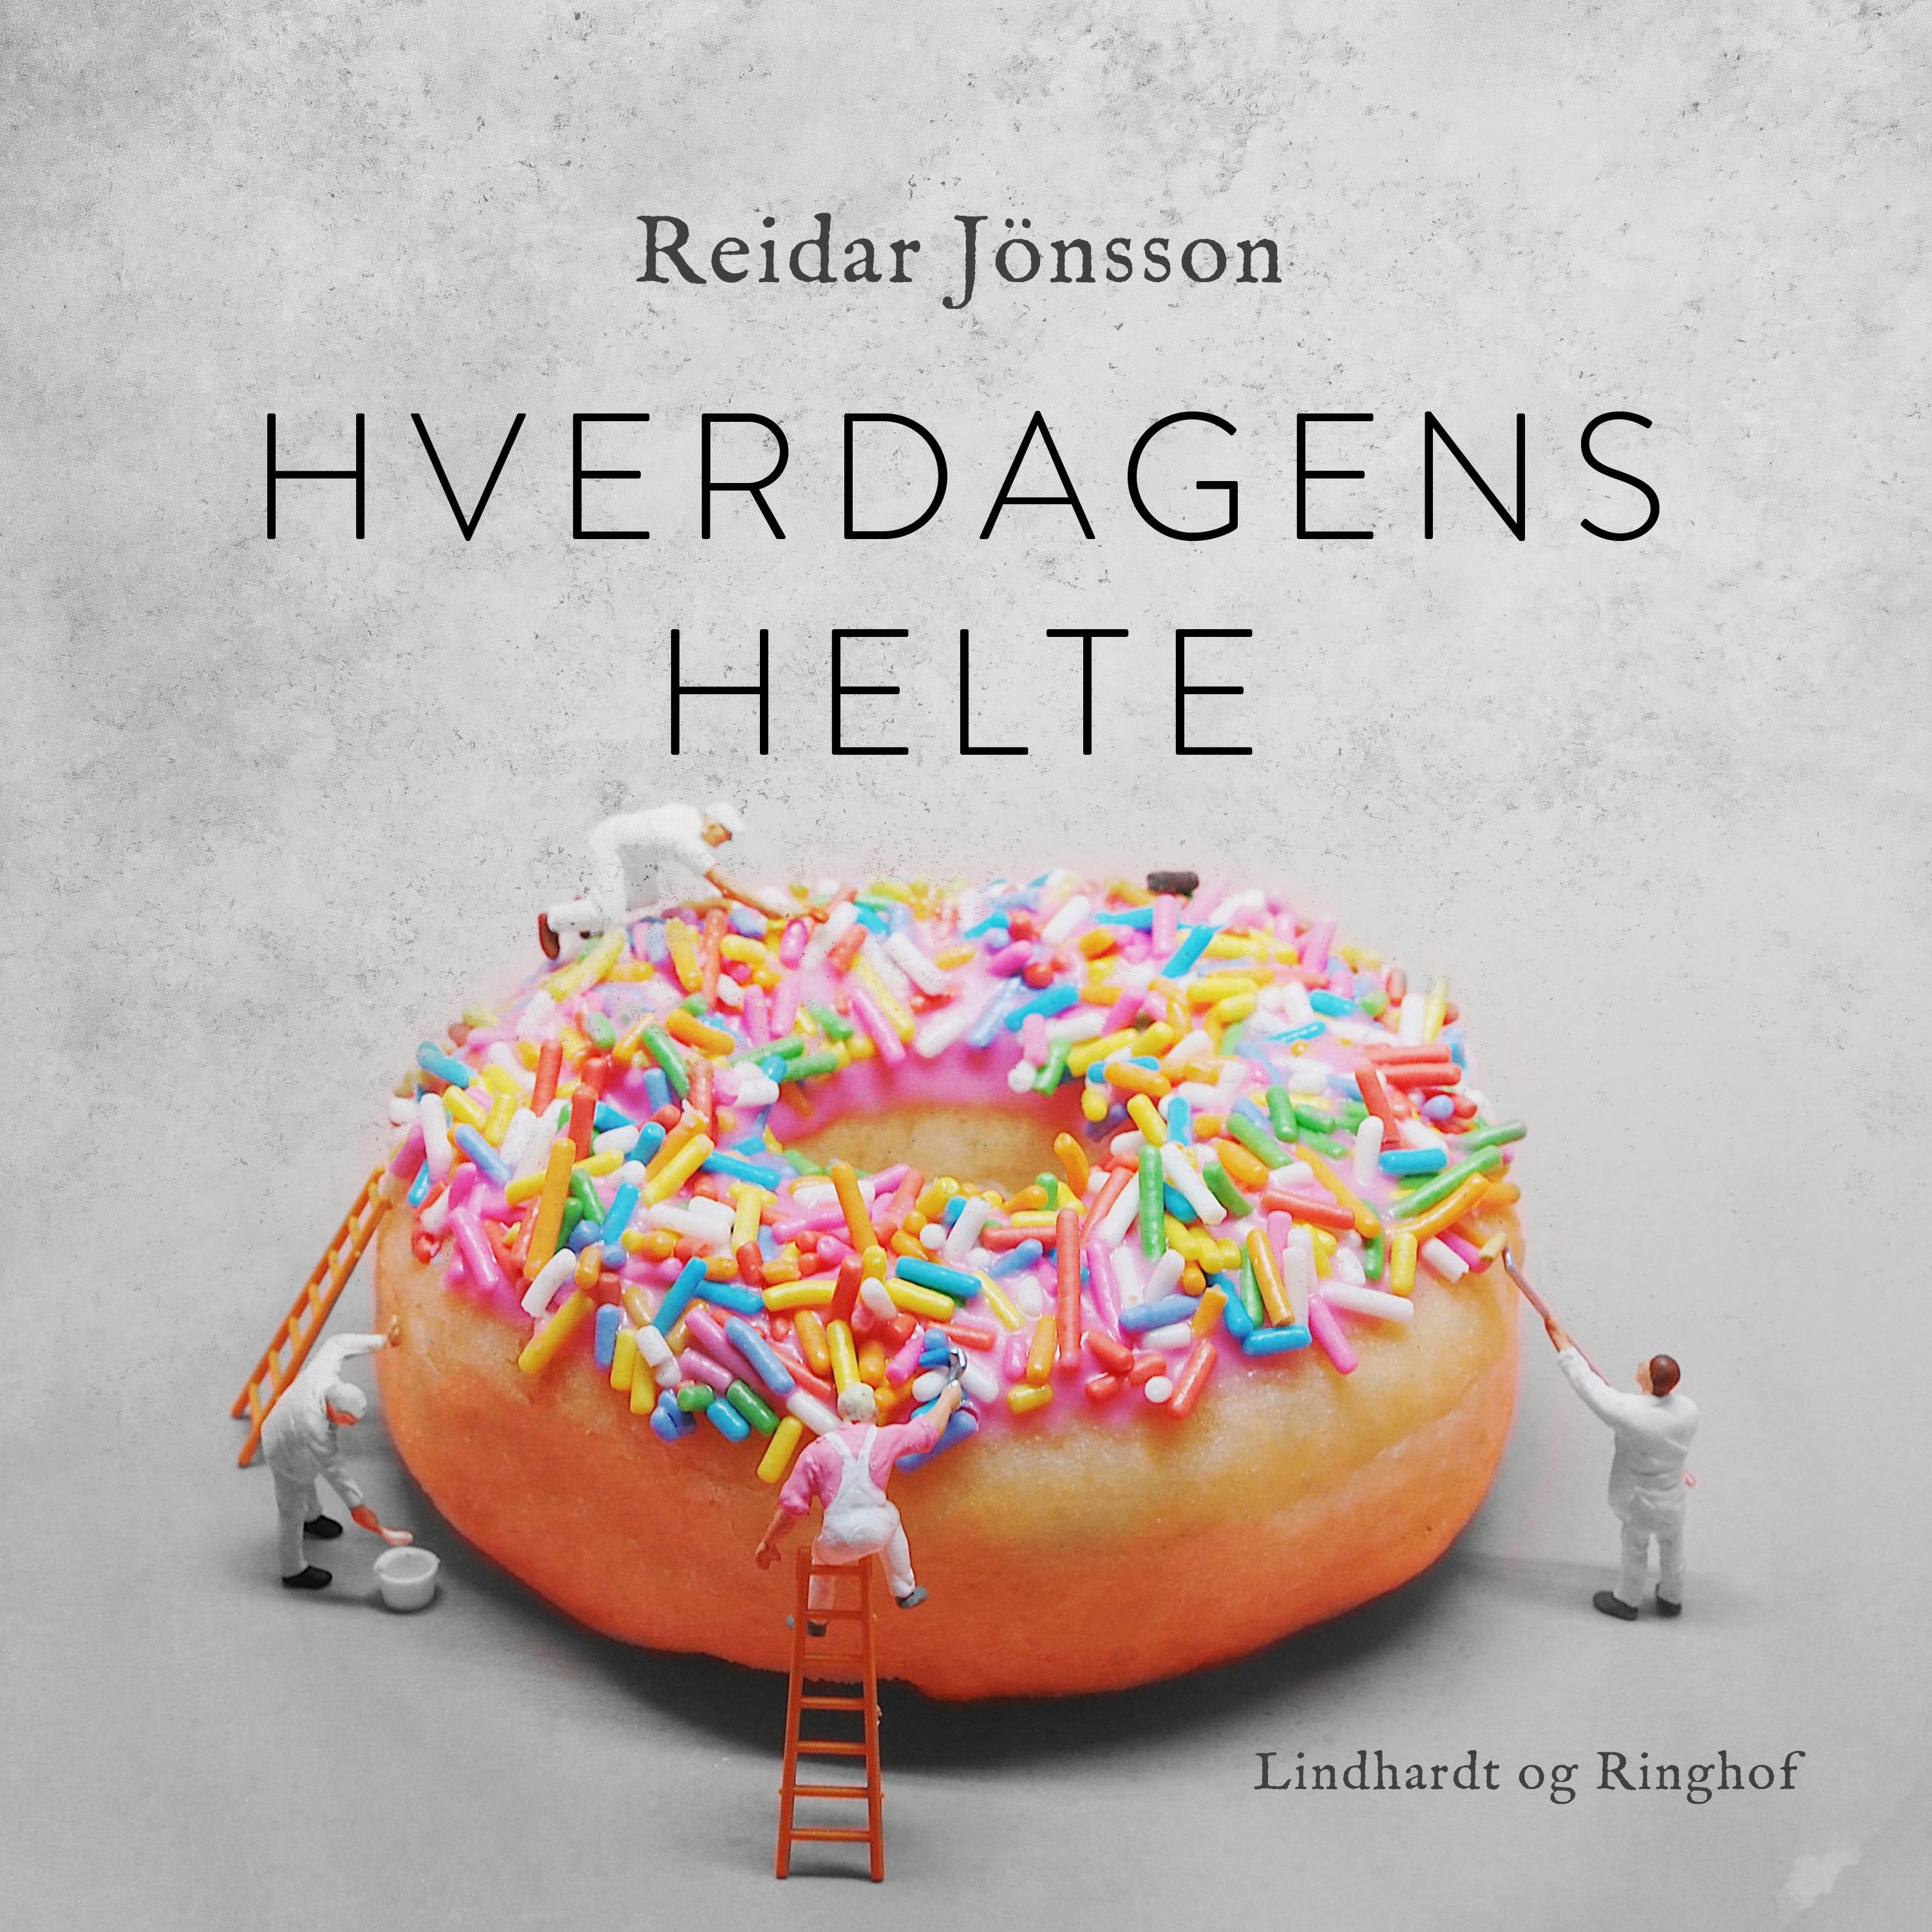 Hverdagens helte, audiobook by Reidar Jönsson